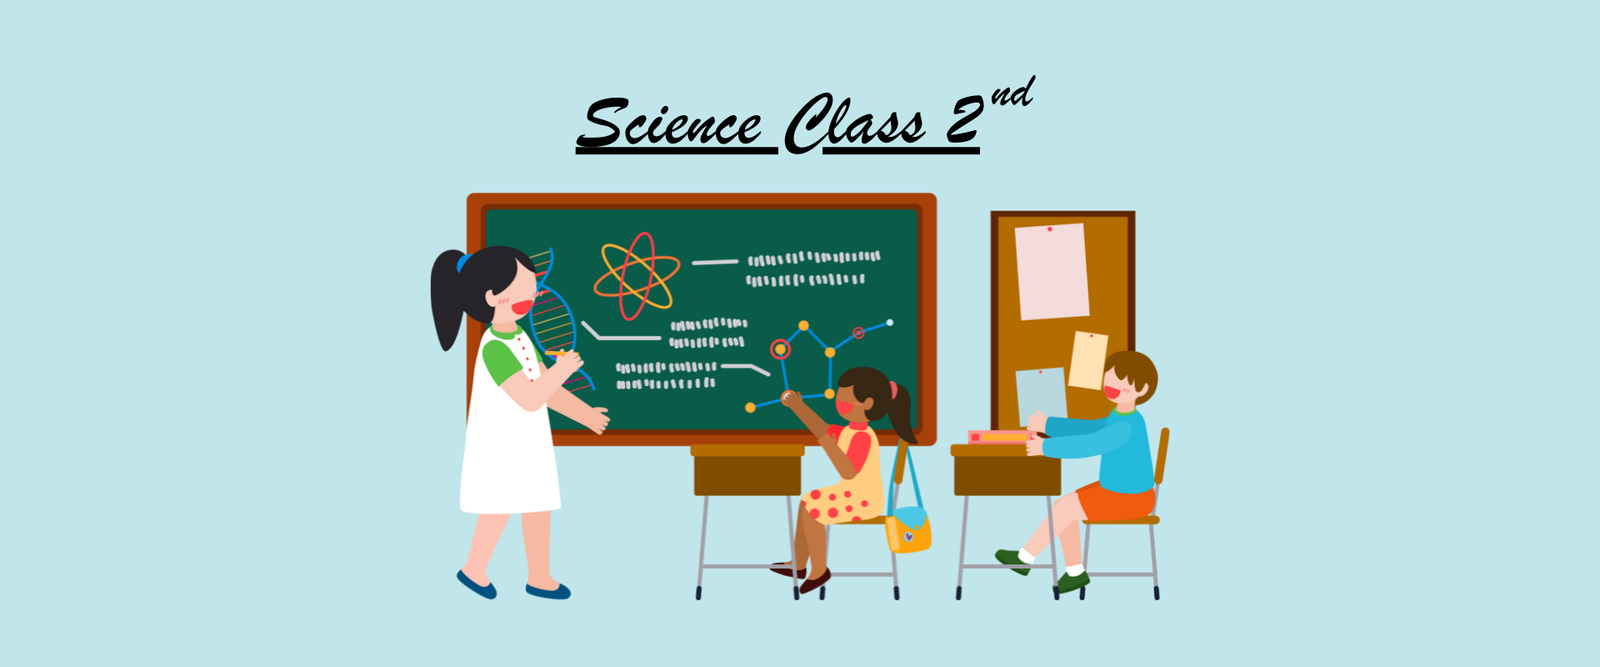 Science Class 2